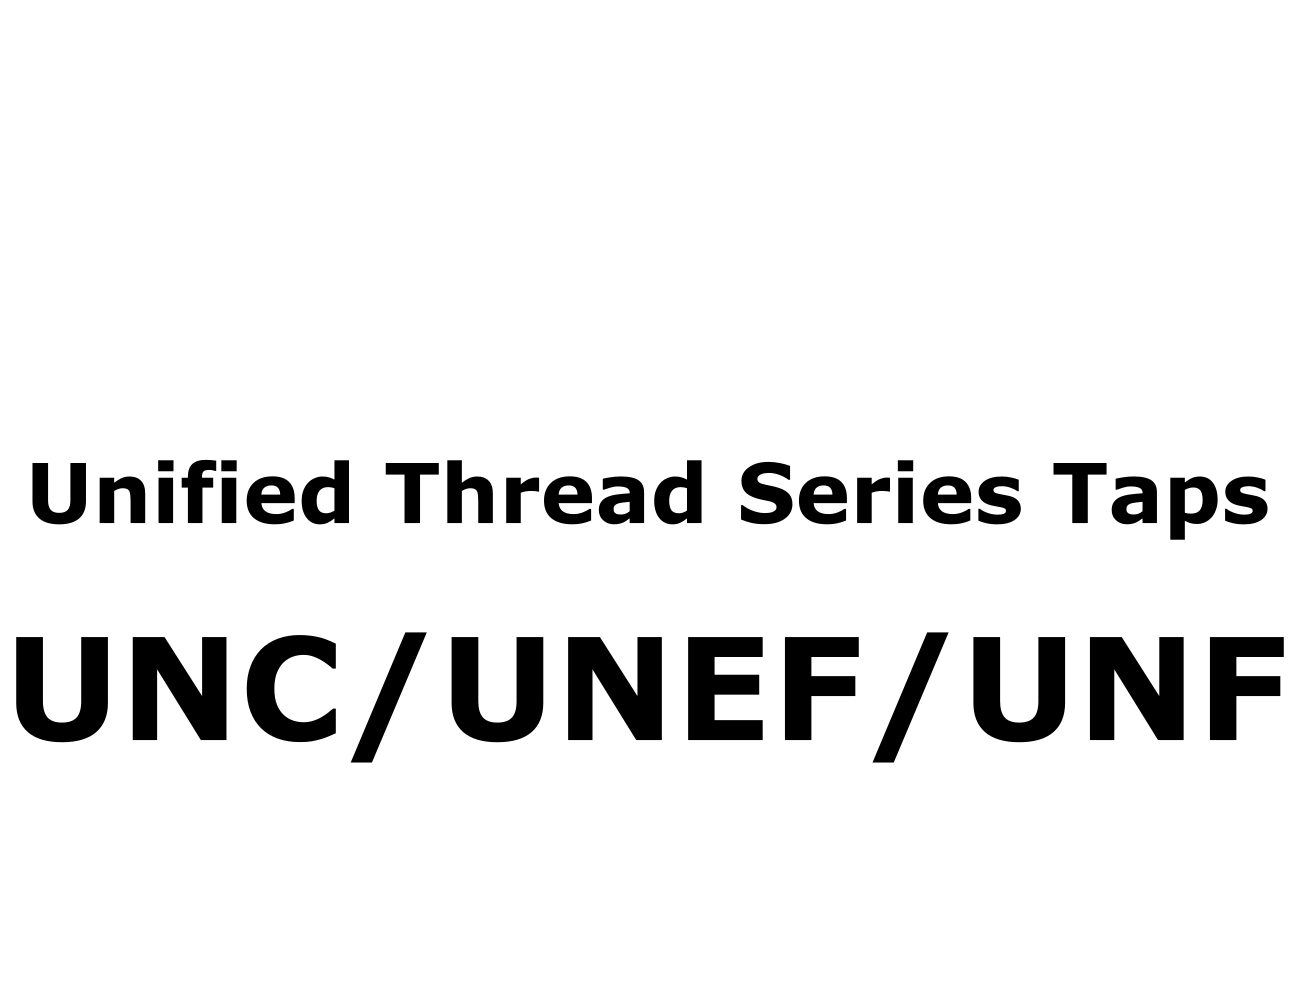 Unified Thread Series UNC/UNEF/UNF